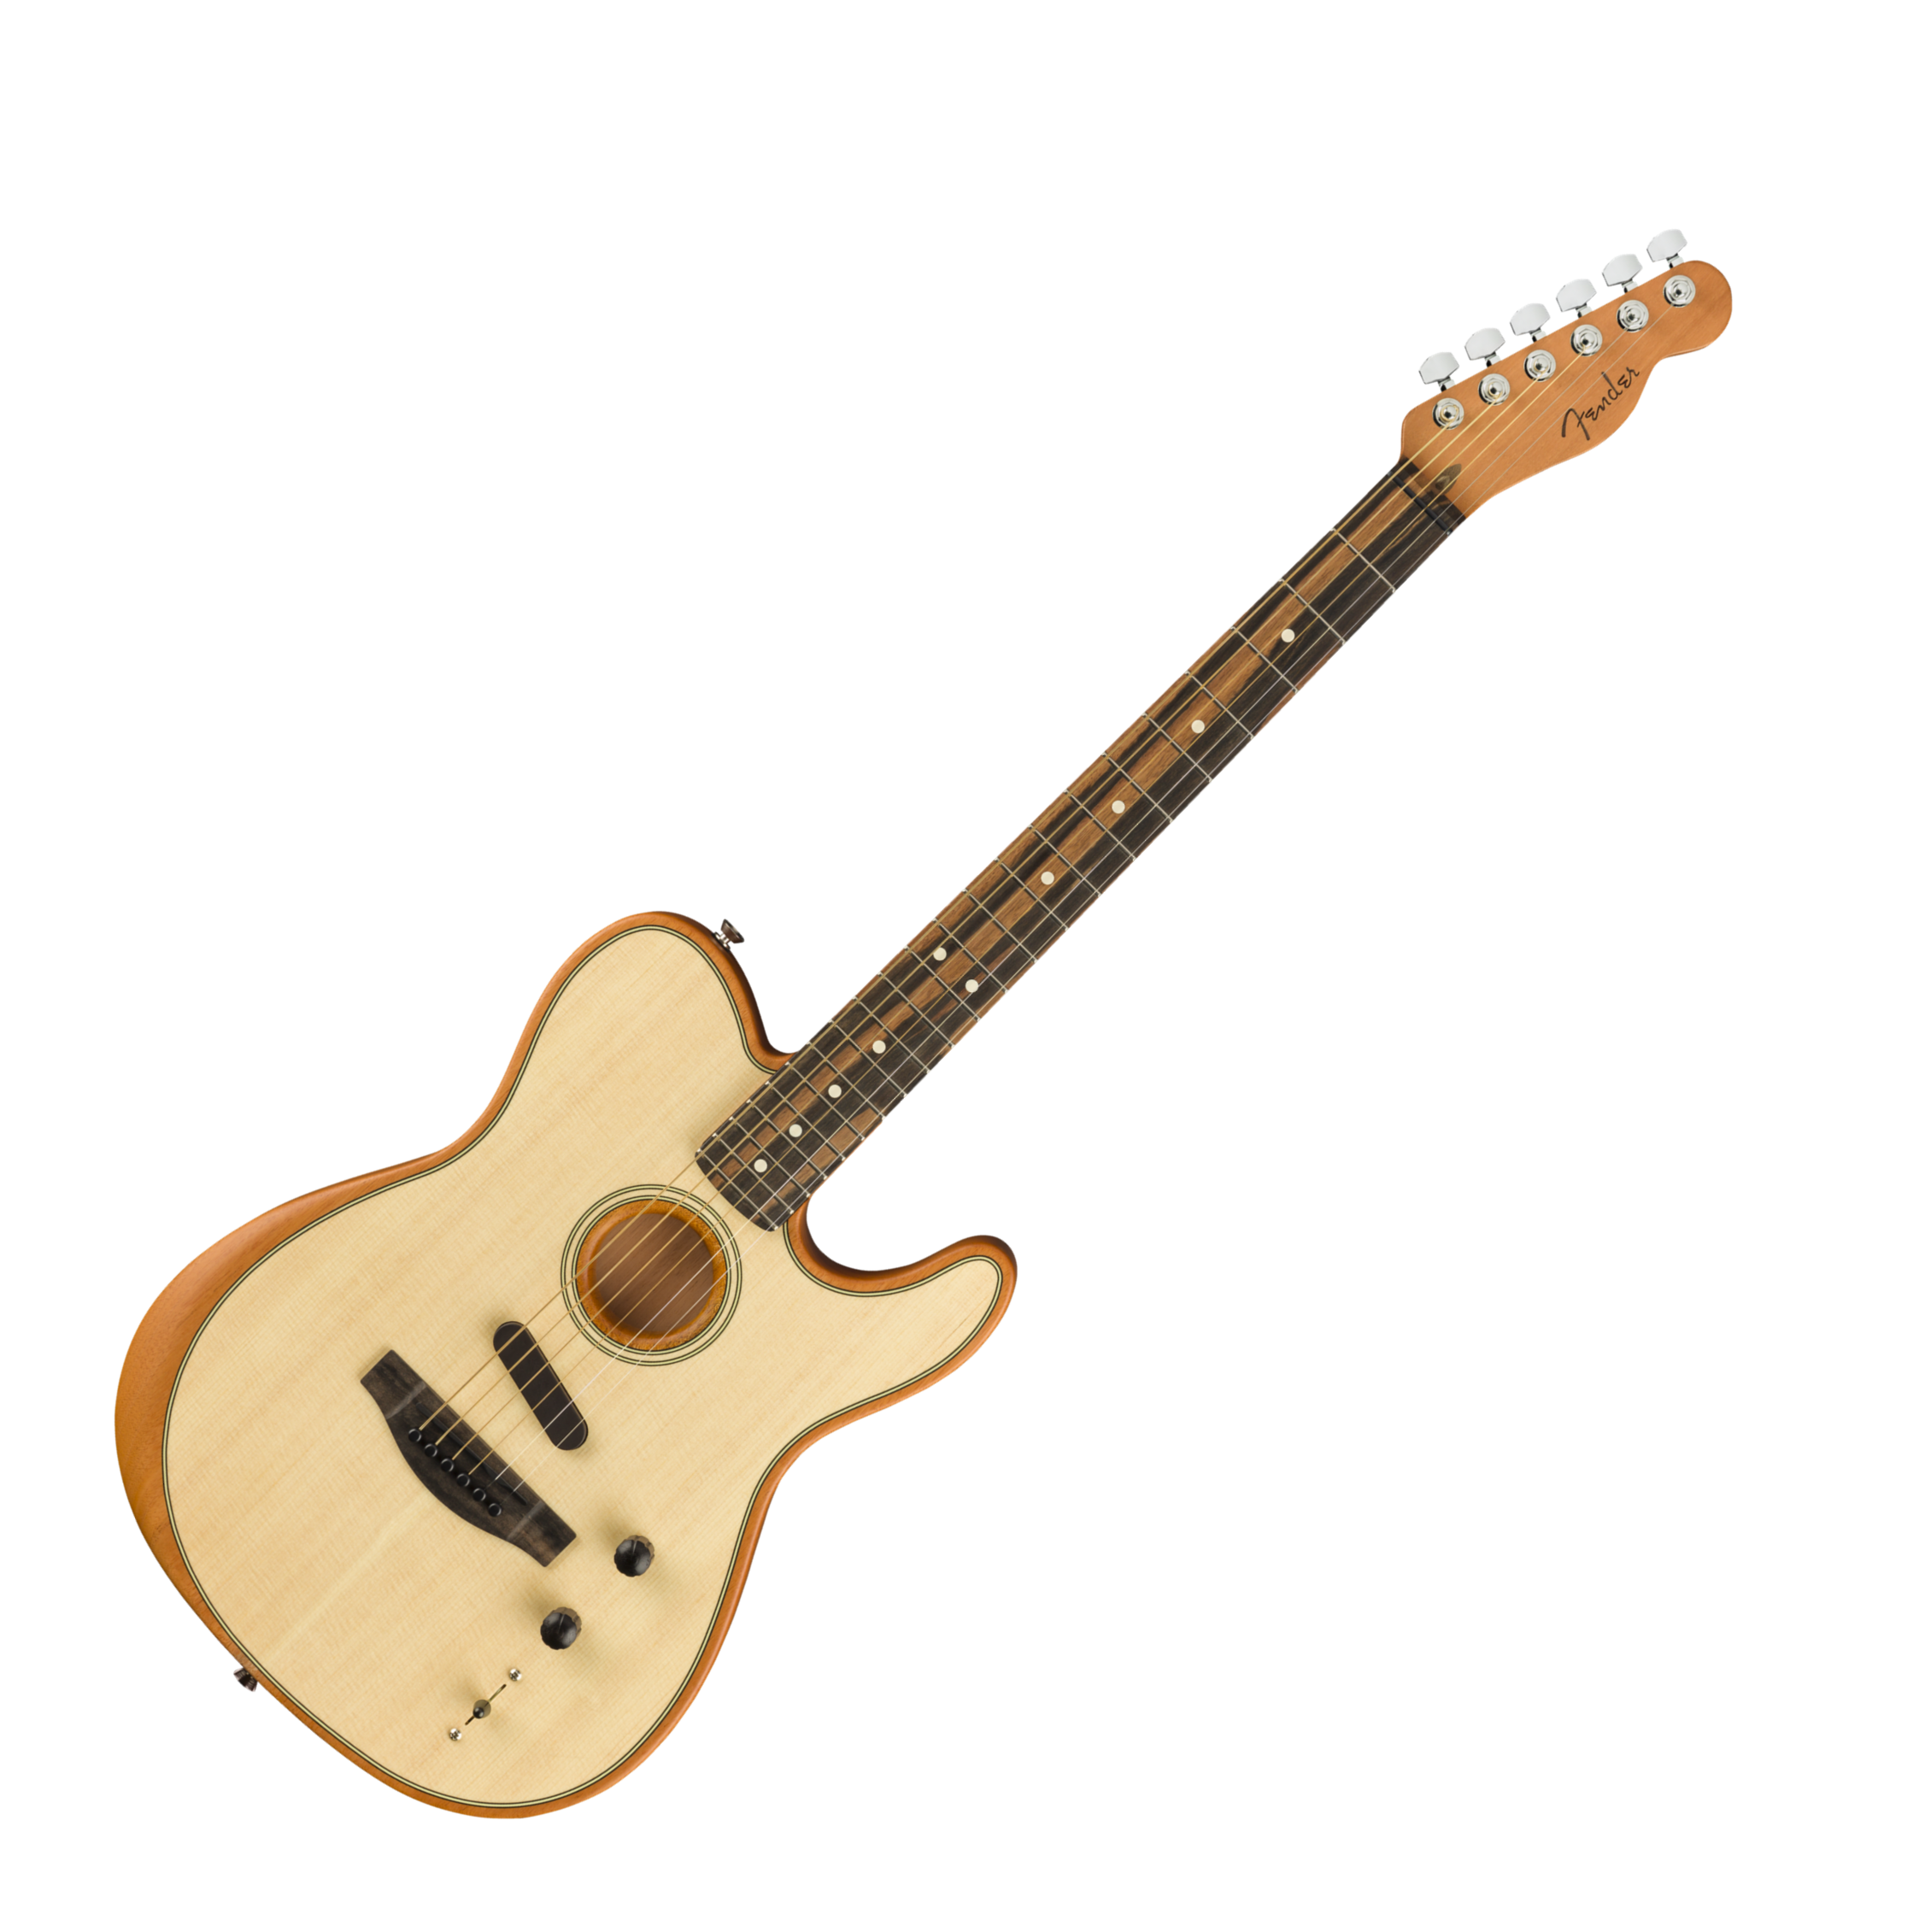 Fender American Acoustasonic Telecaster Acoustic-Electric Guitar Natural